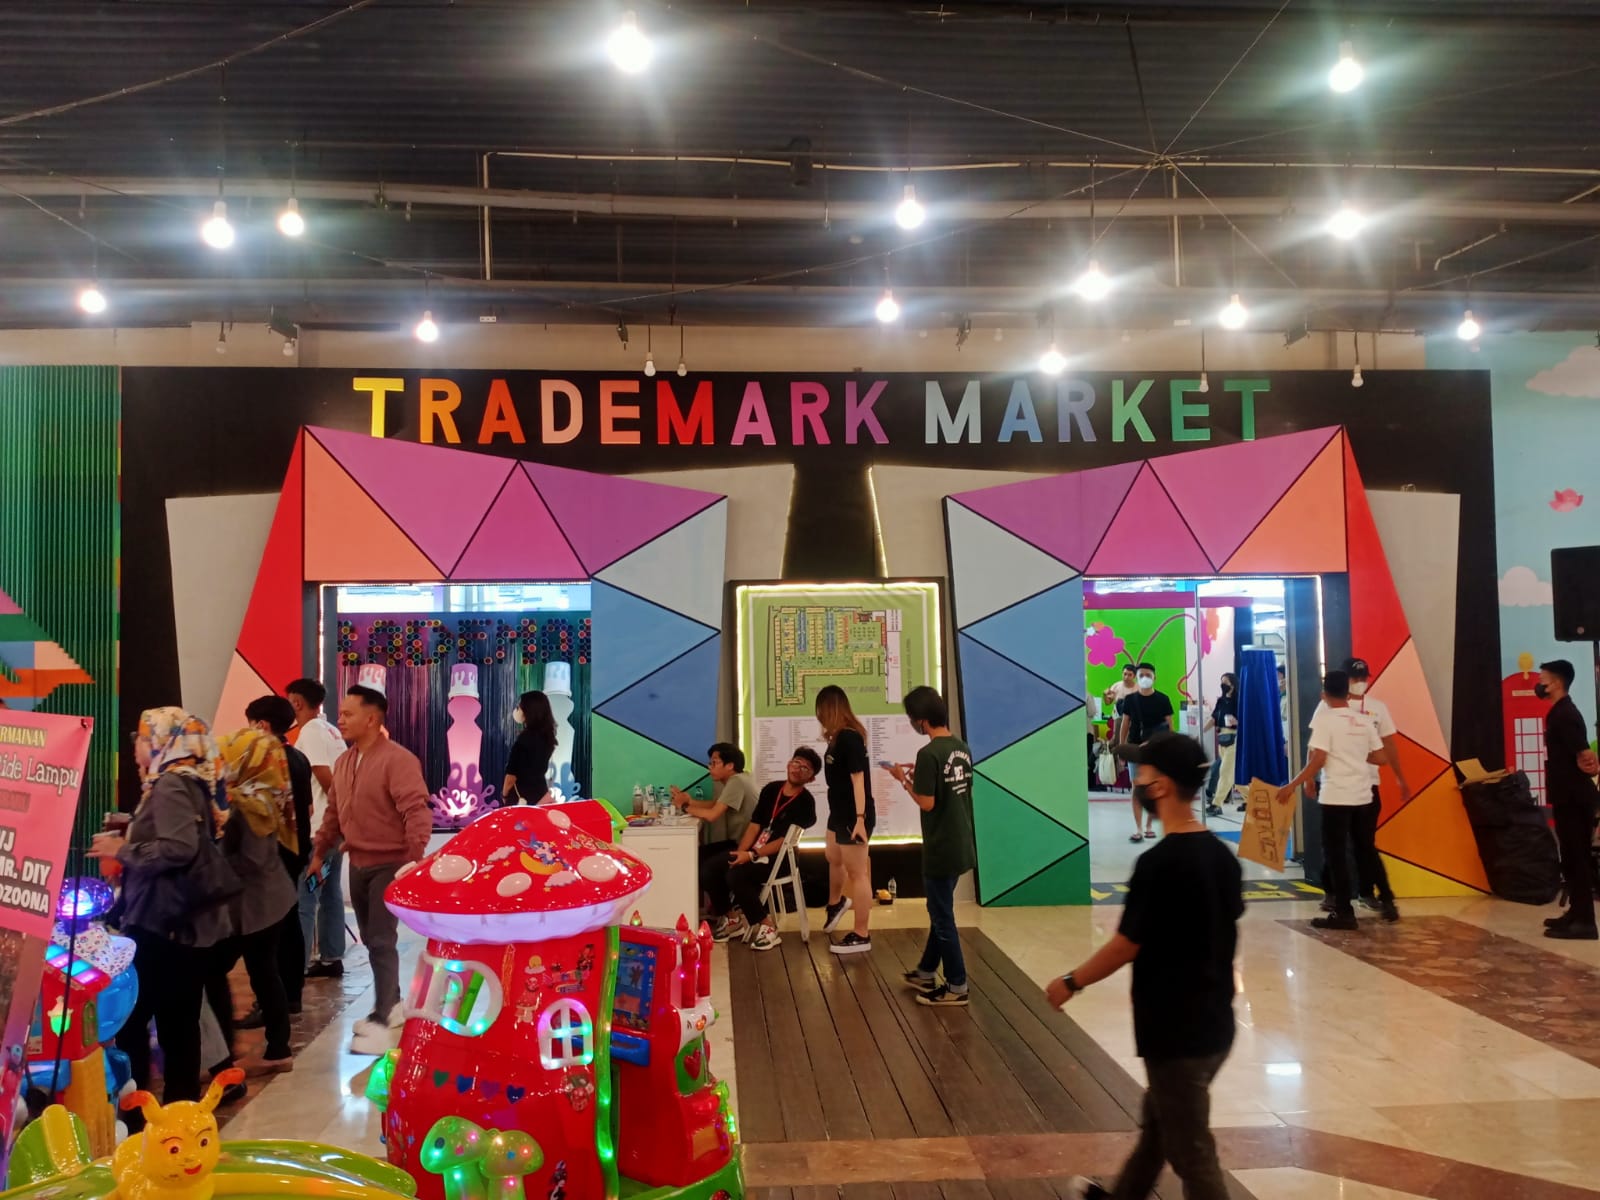 Trademark Market Kembali Hadir di Bandung